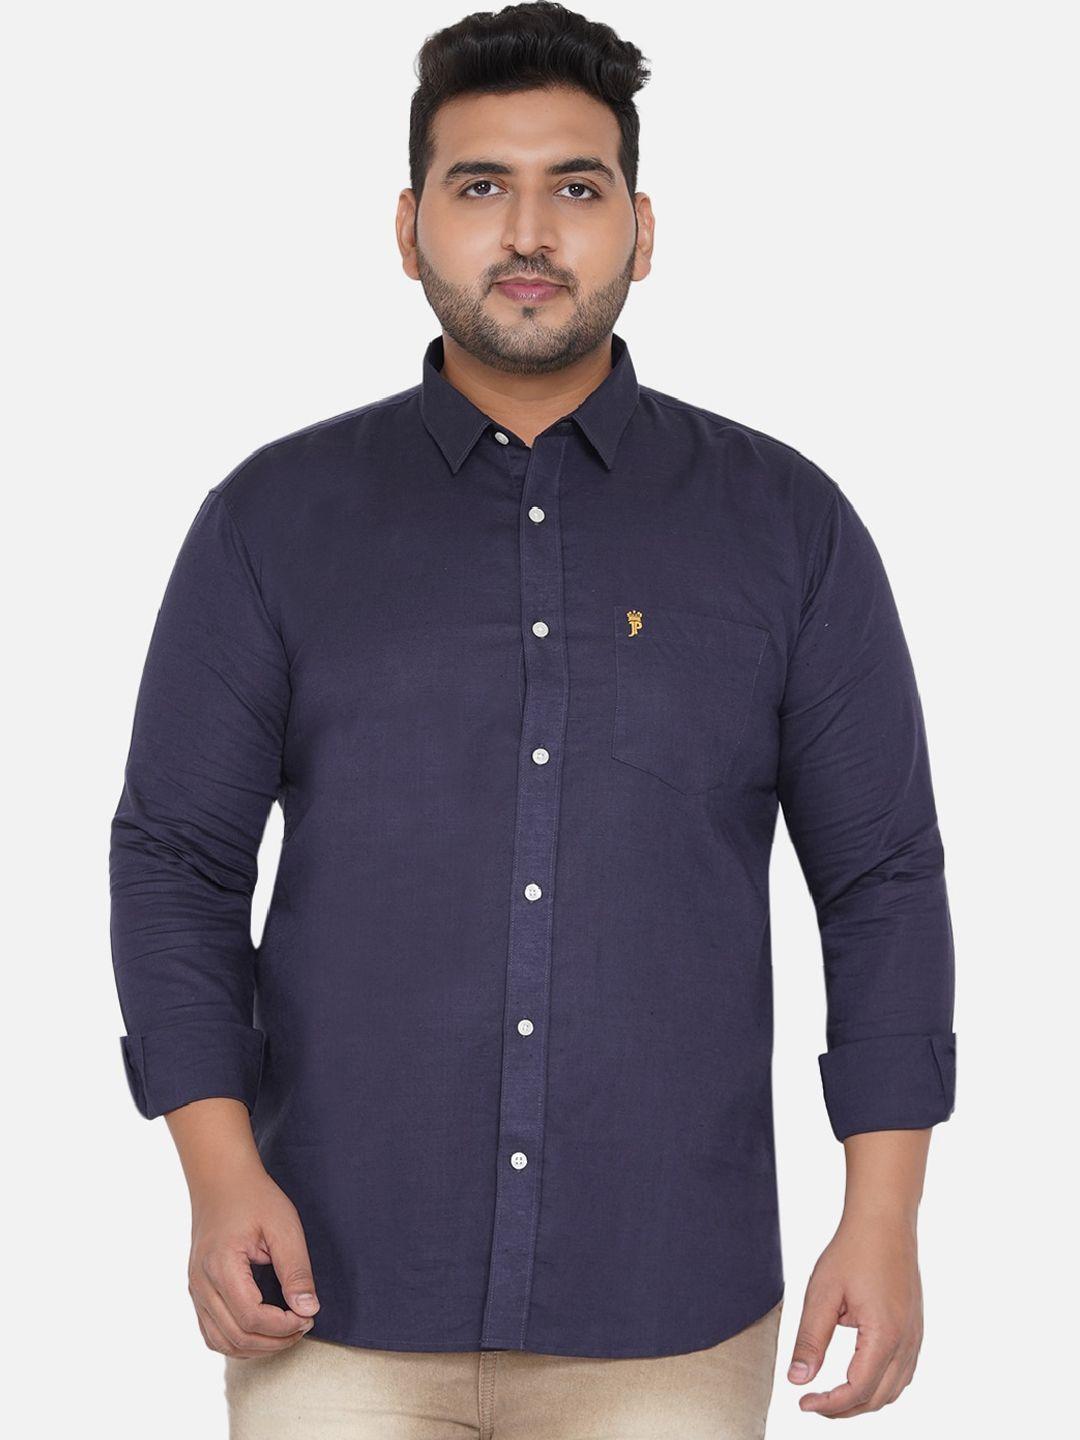 john pride men navy blue solid opaque plus size casual shirt